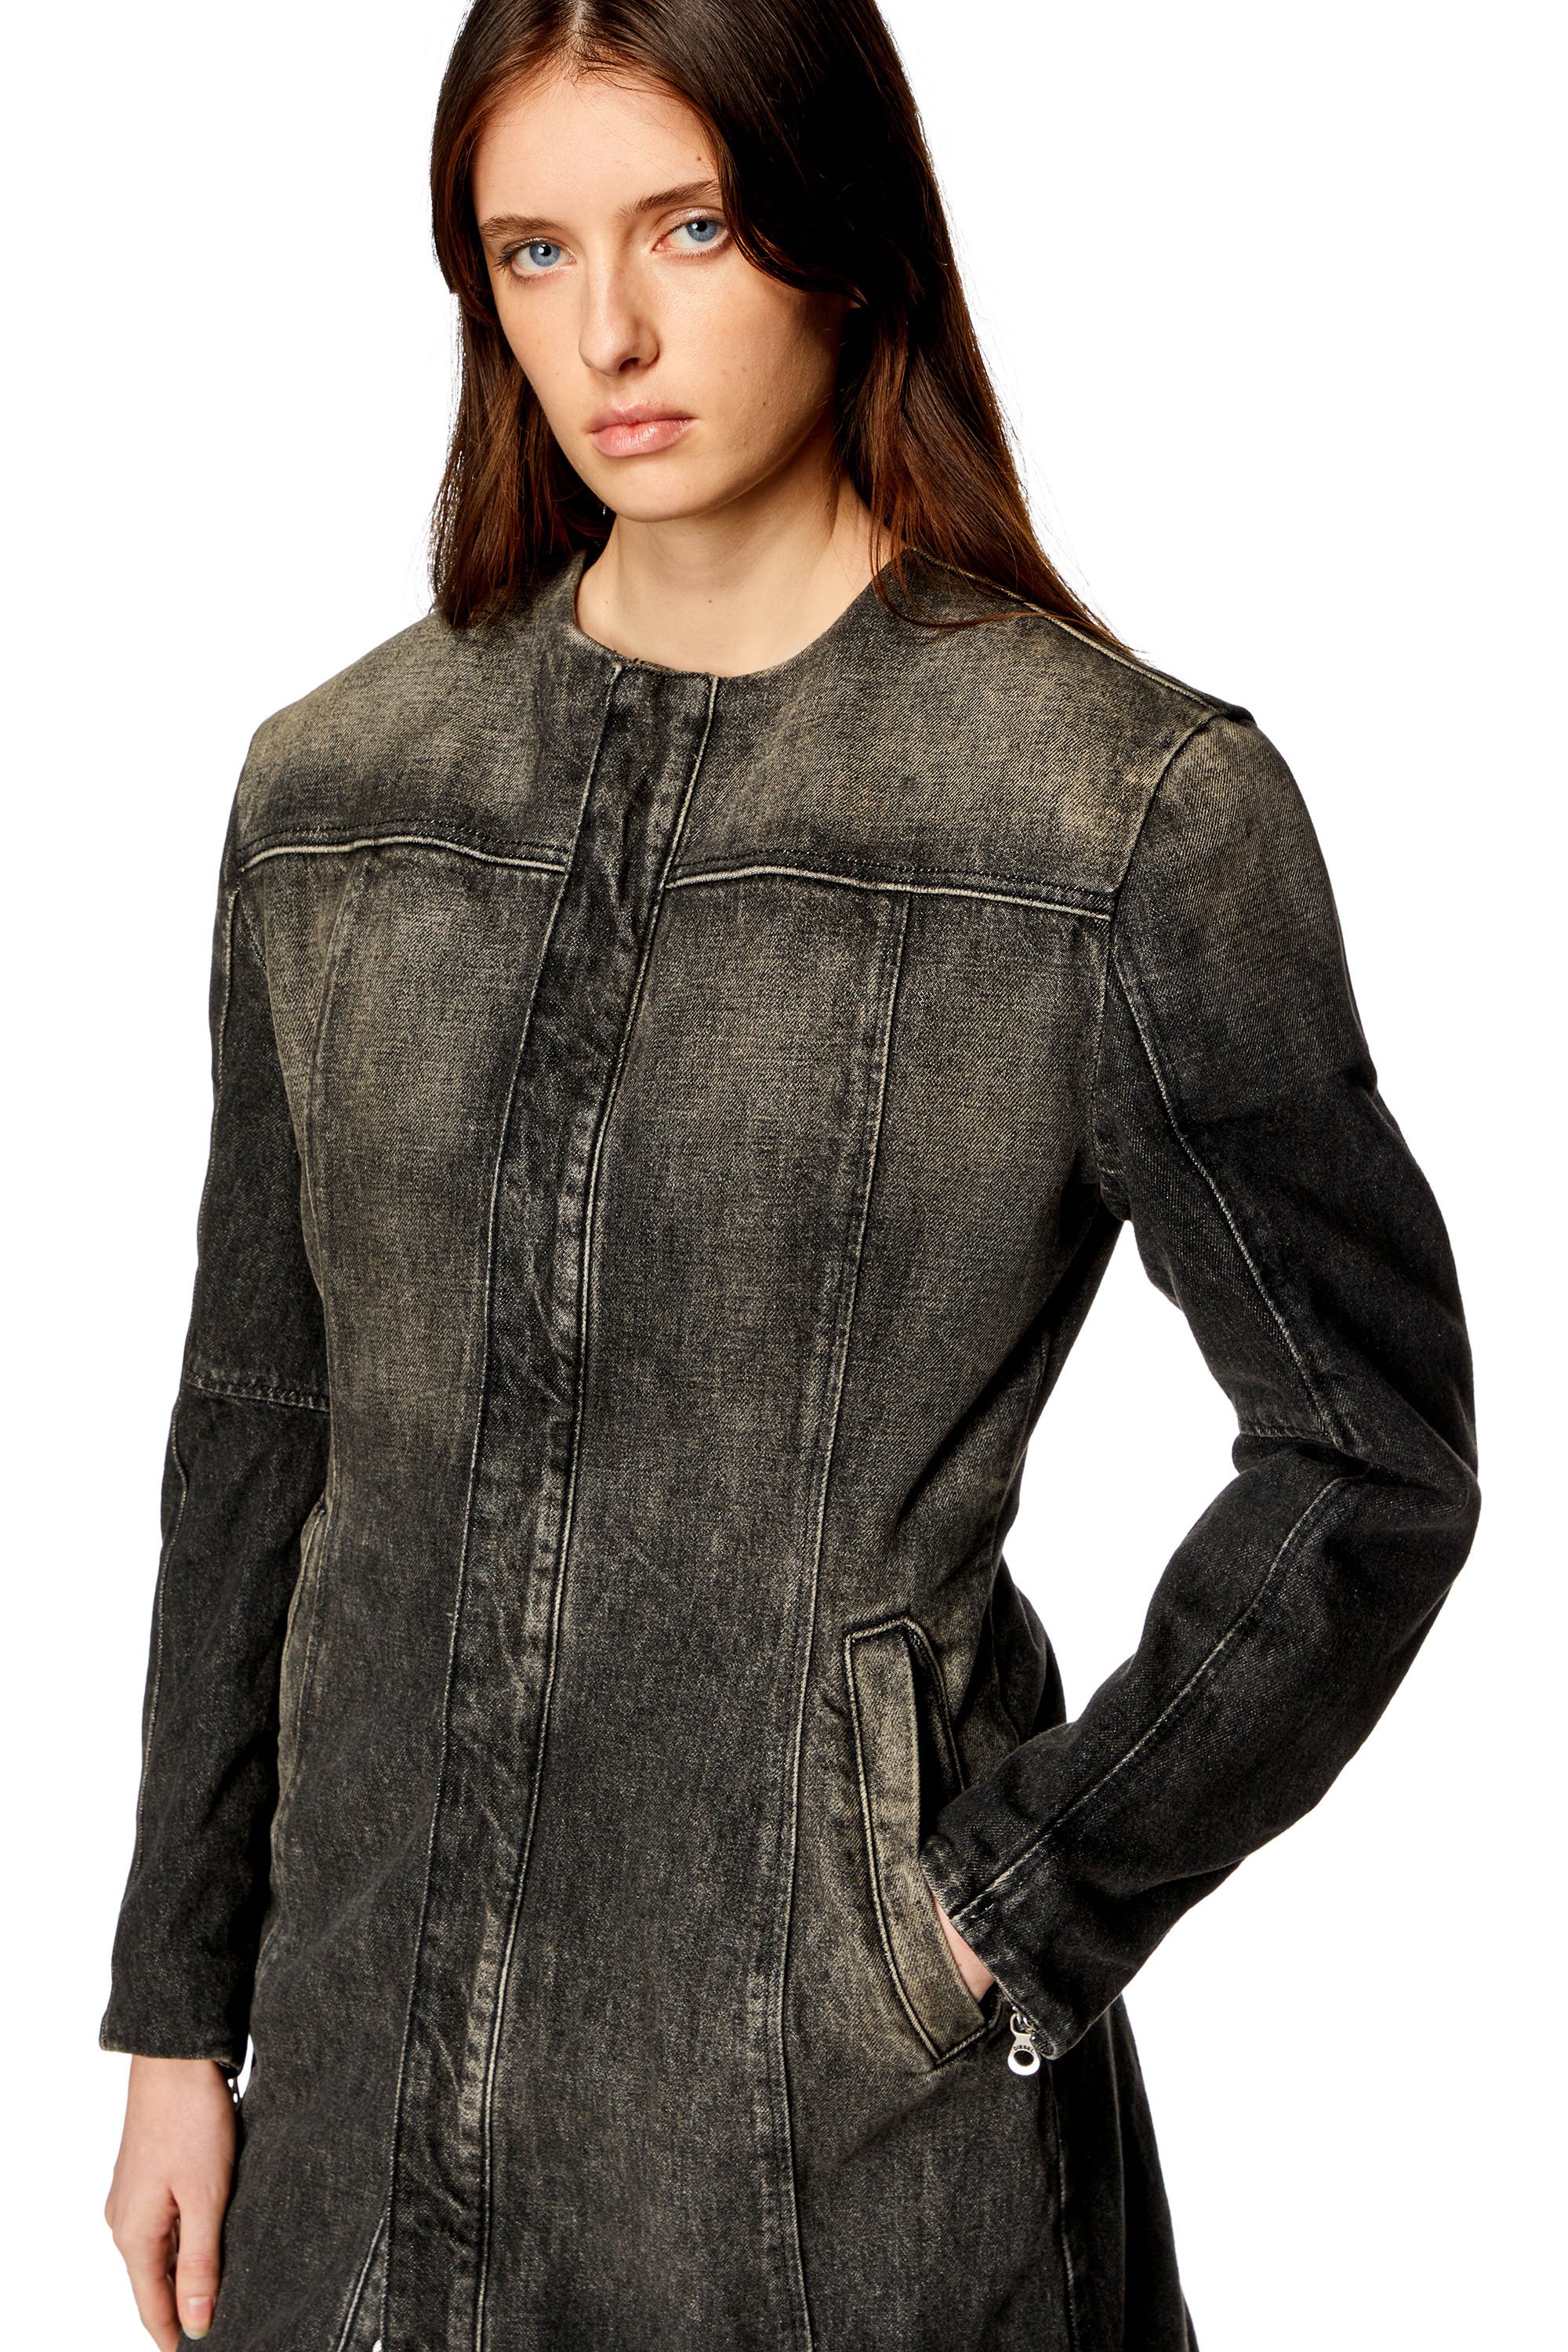 Diesel - DE-SY-S, Woman Denim coat in cotton and hemp in Black - Image 3